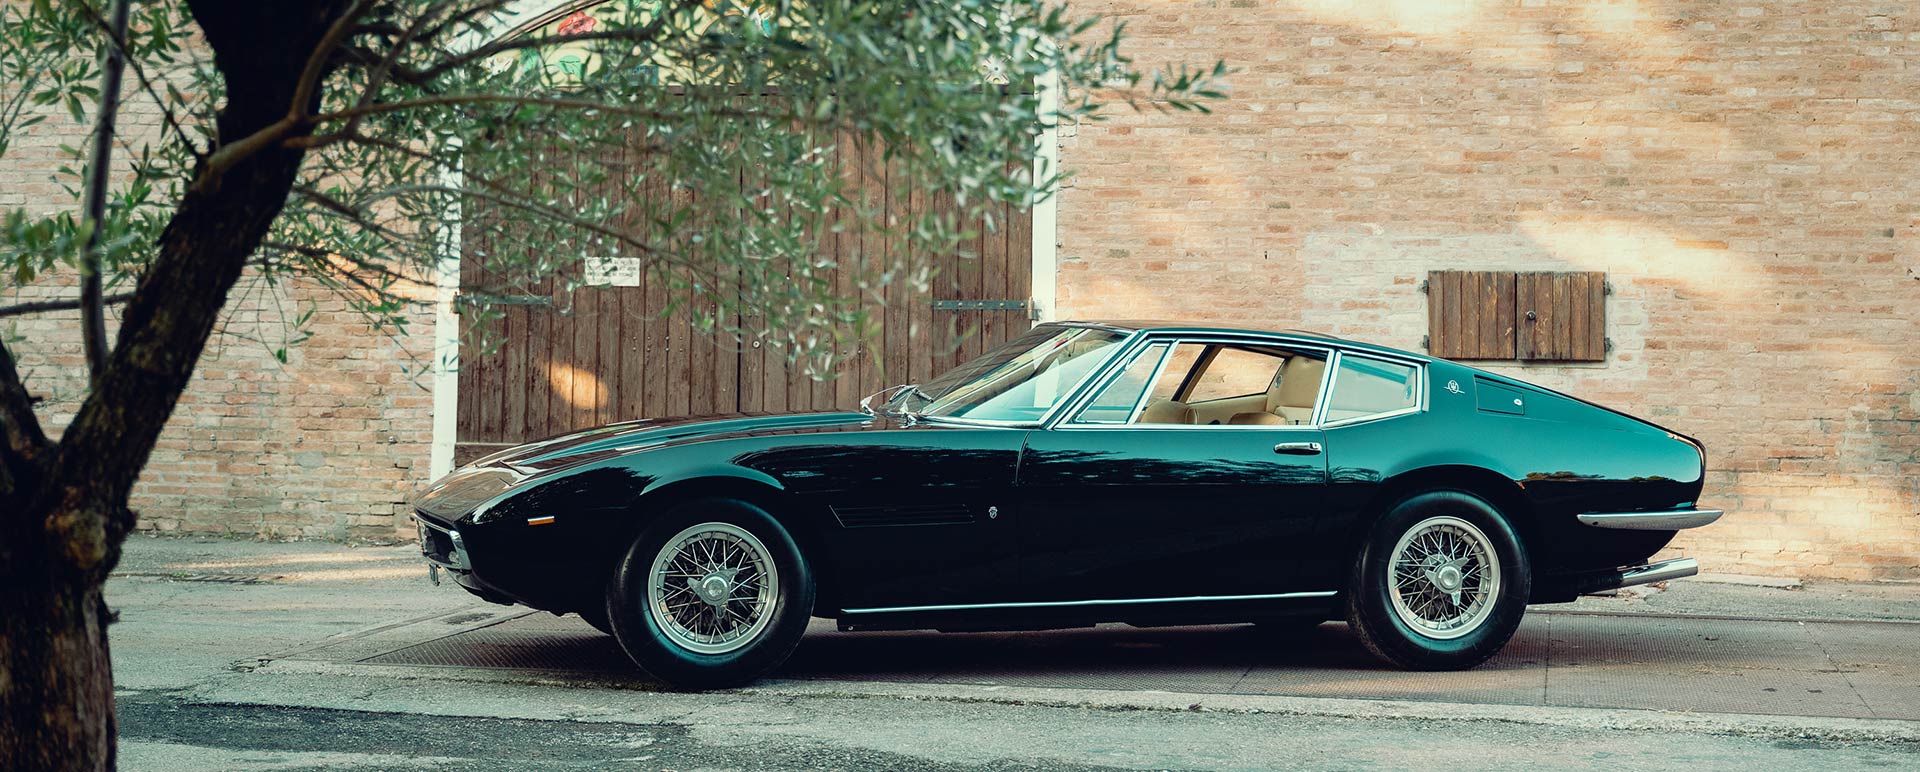 The Maserati Ghibli celebrates 55 years